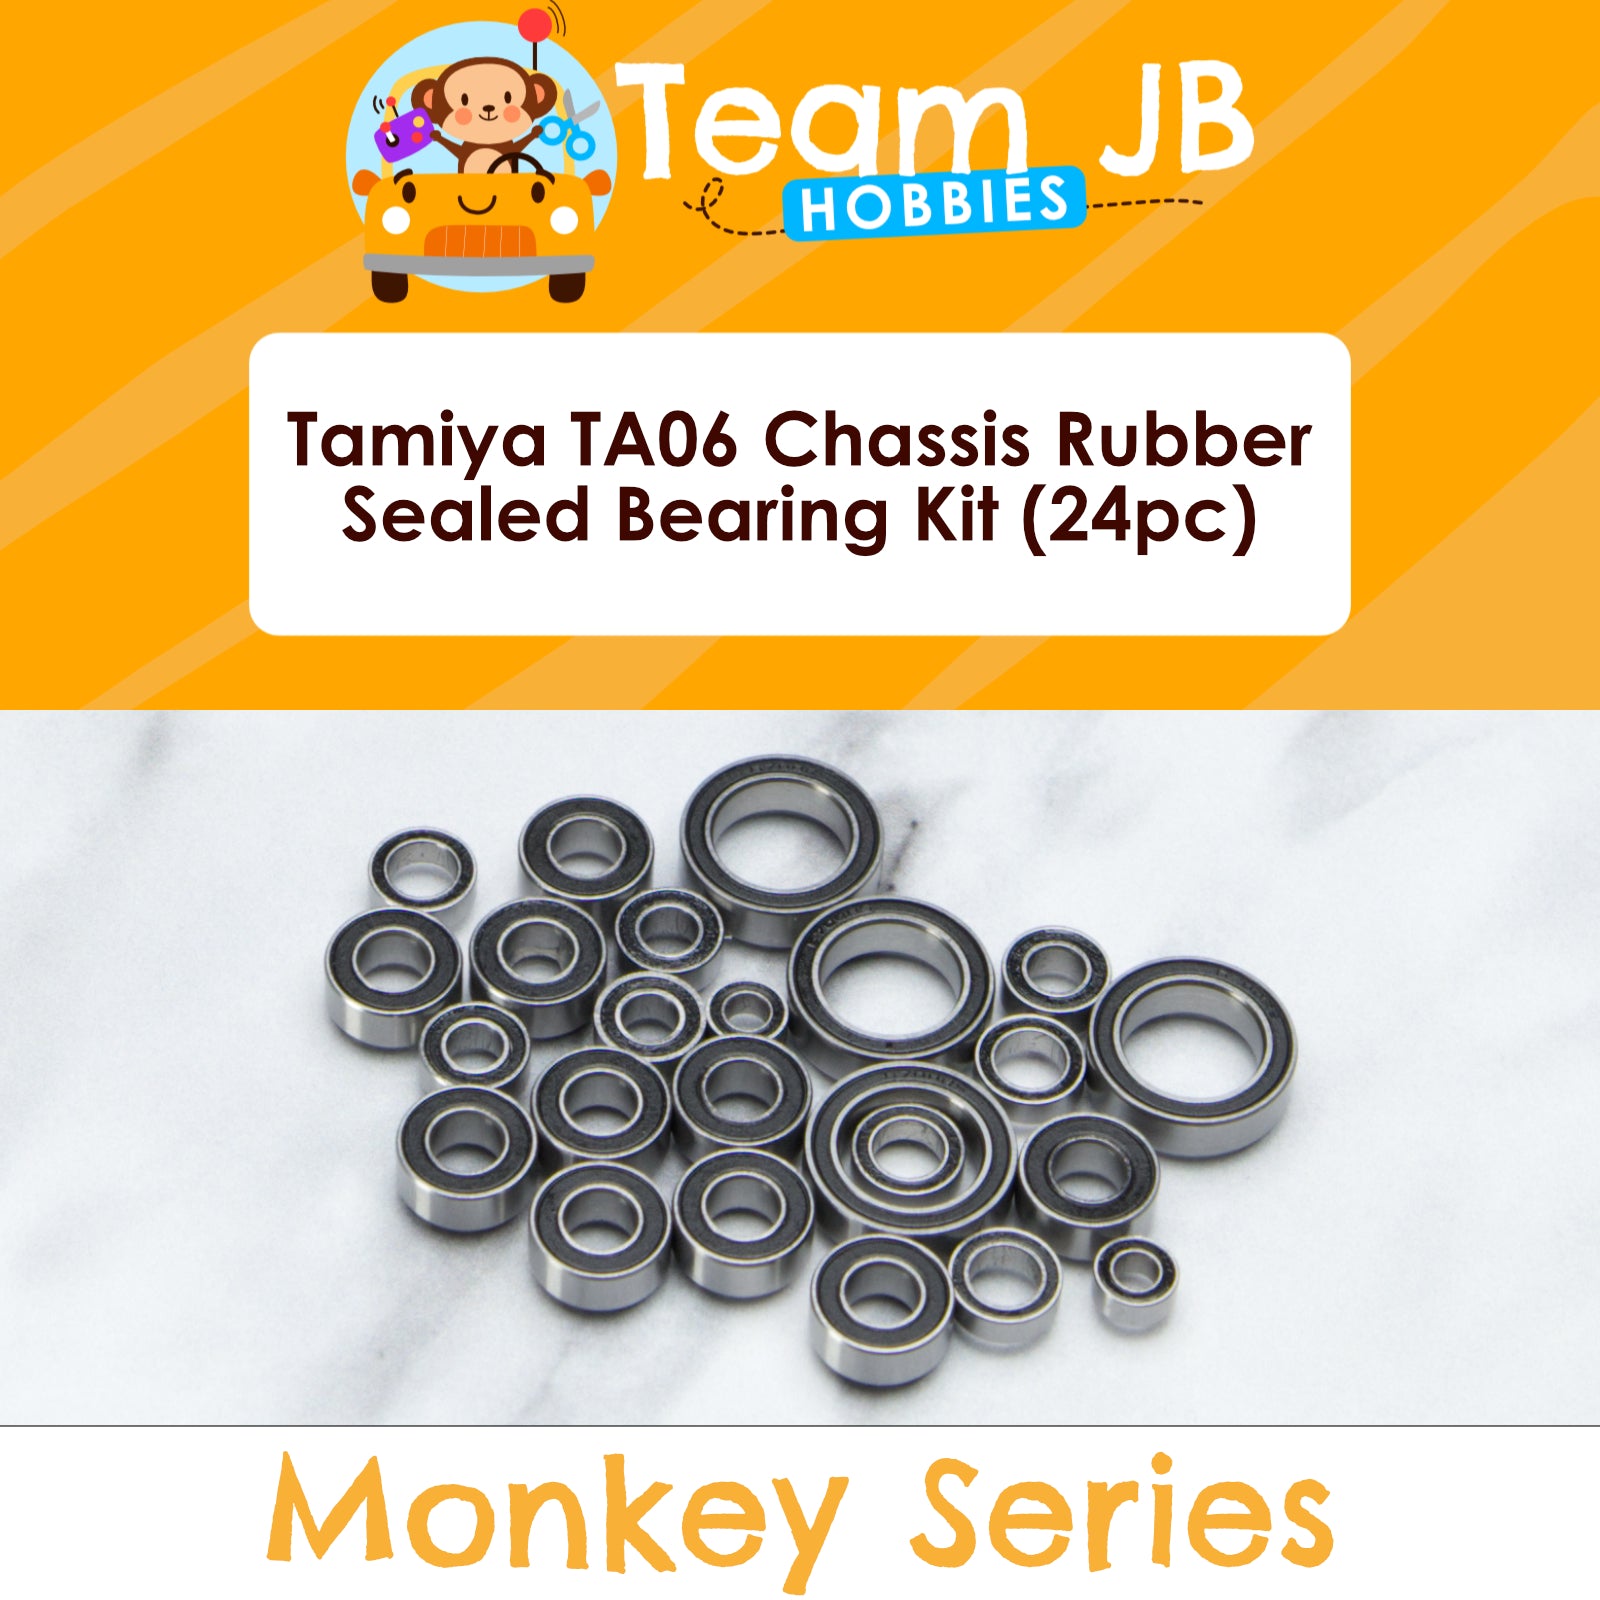 Tamiya TA06 Chassis Rubber - Sealed Bearing Kit